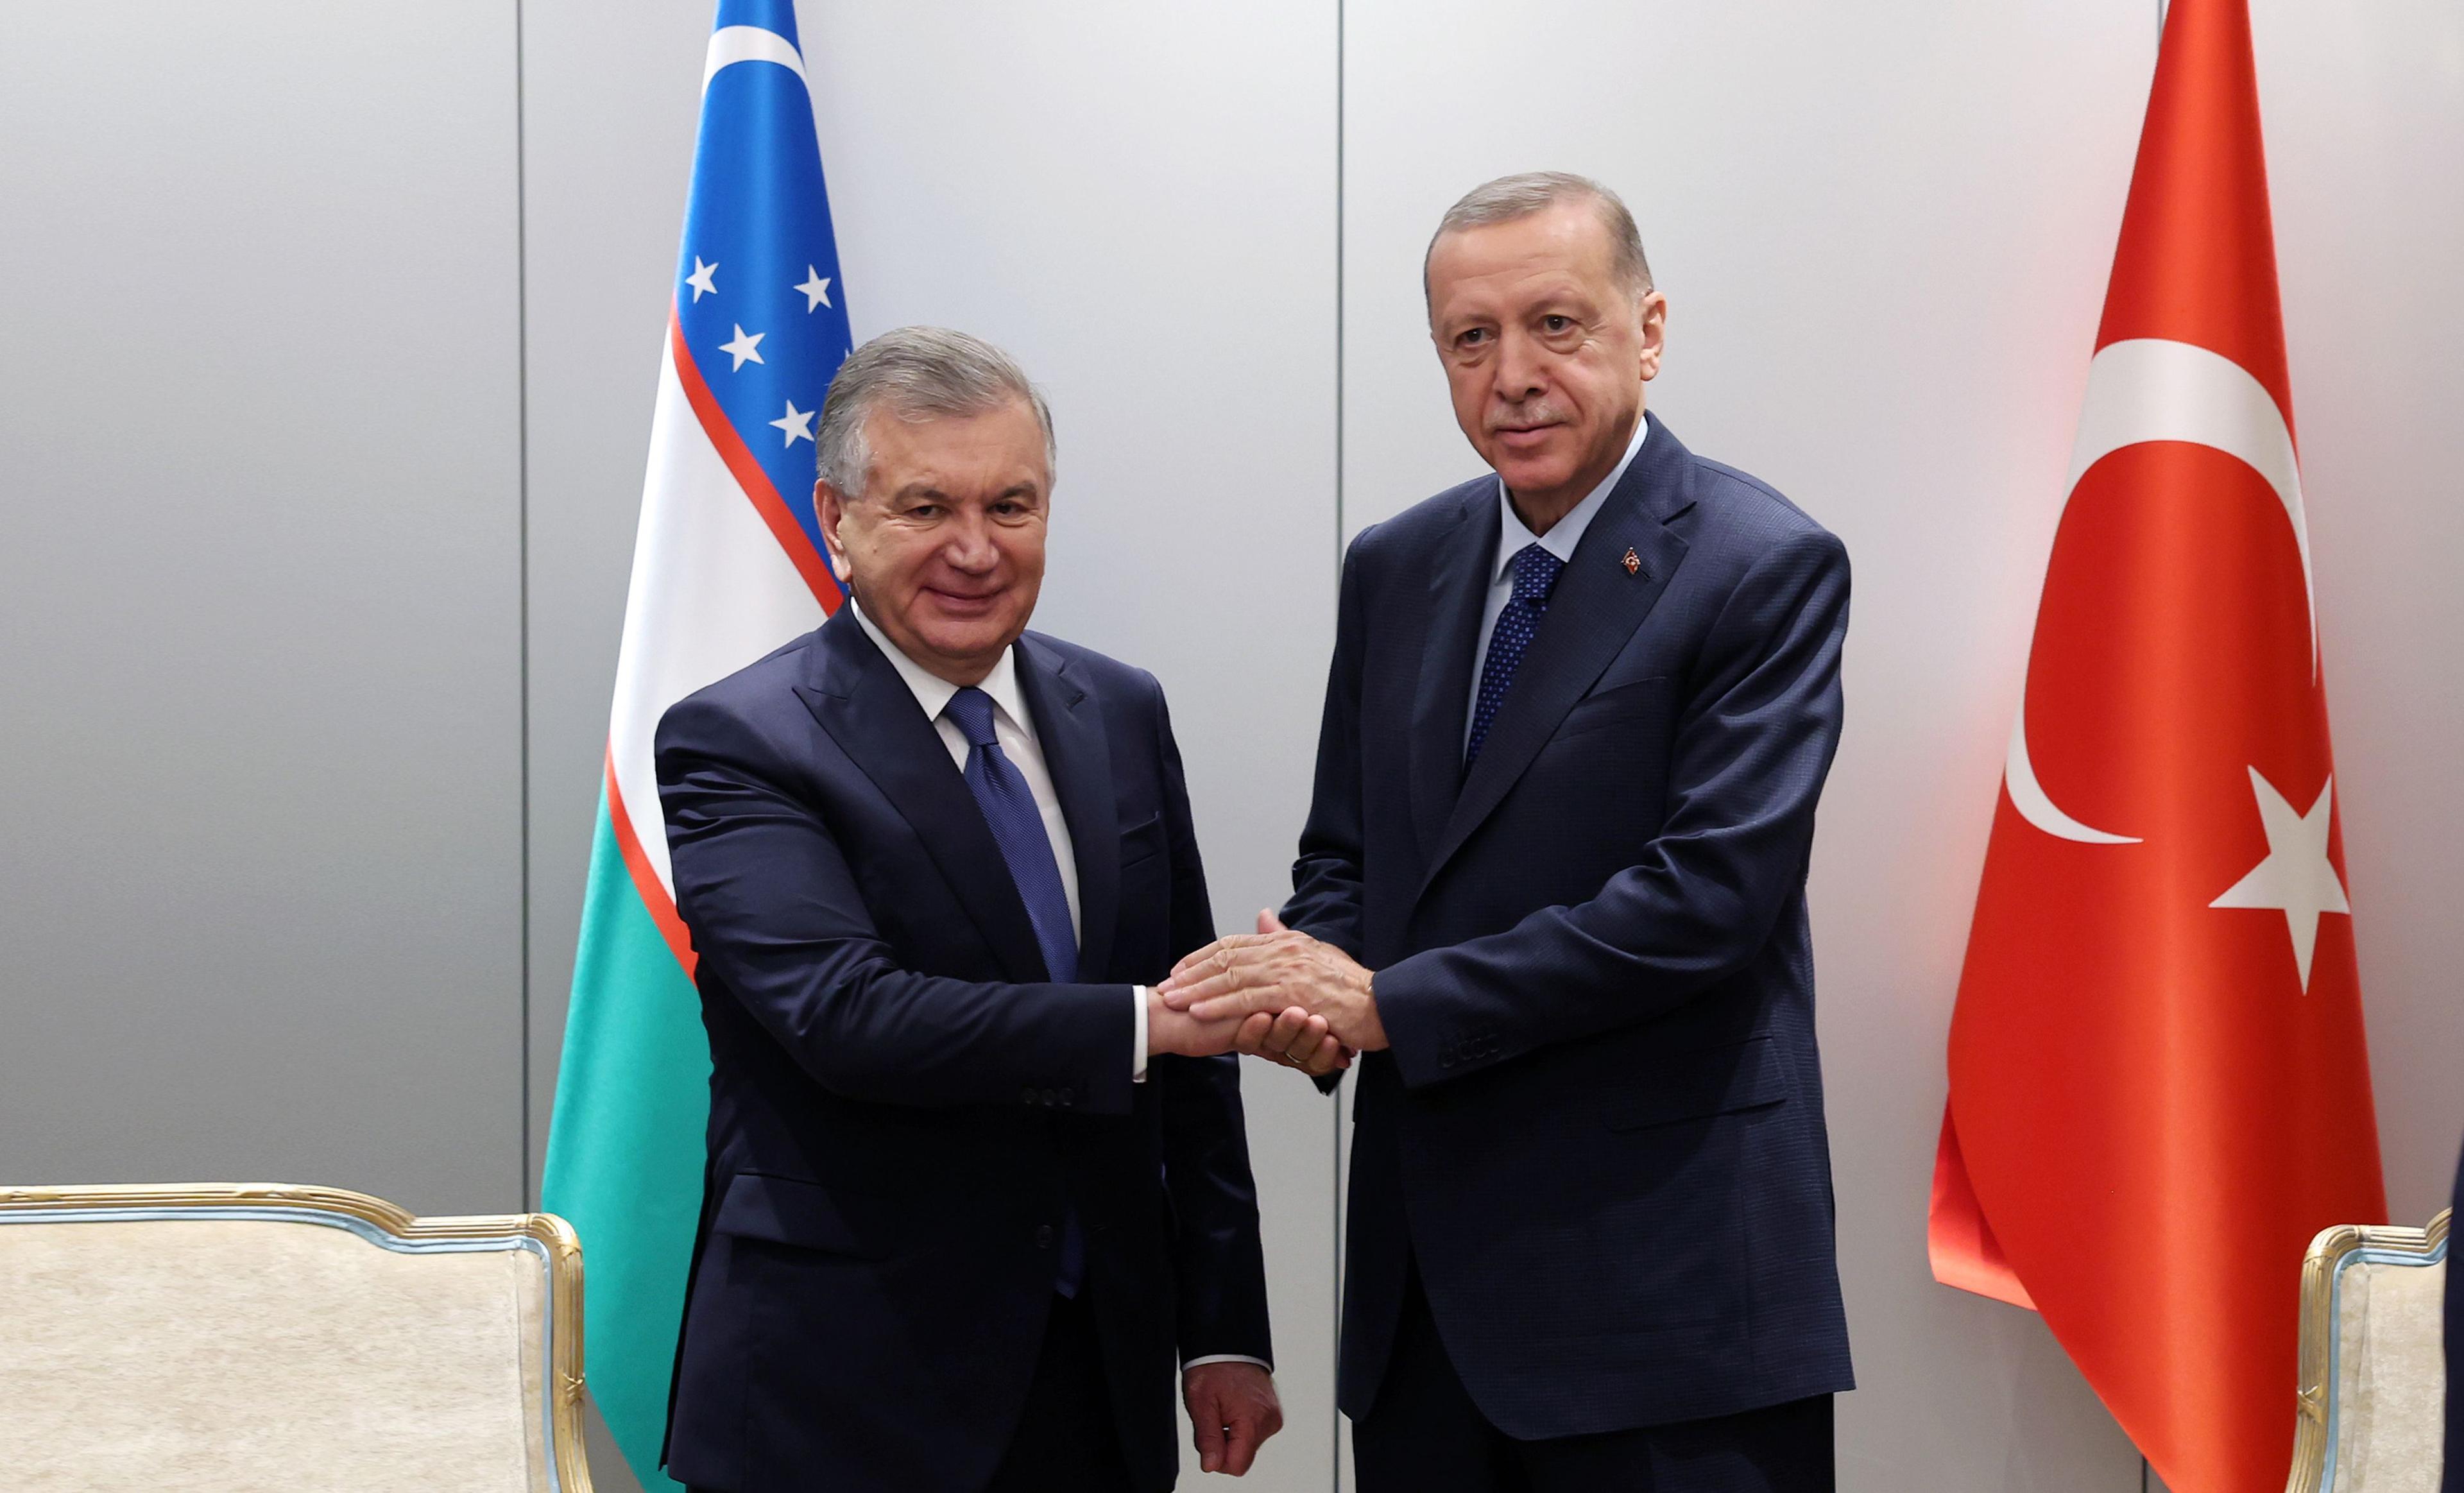 The President of Uzbekistan will make an official visit to Turkiye